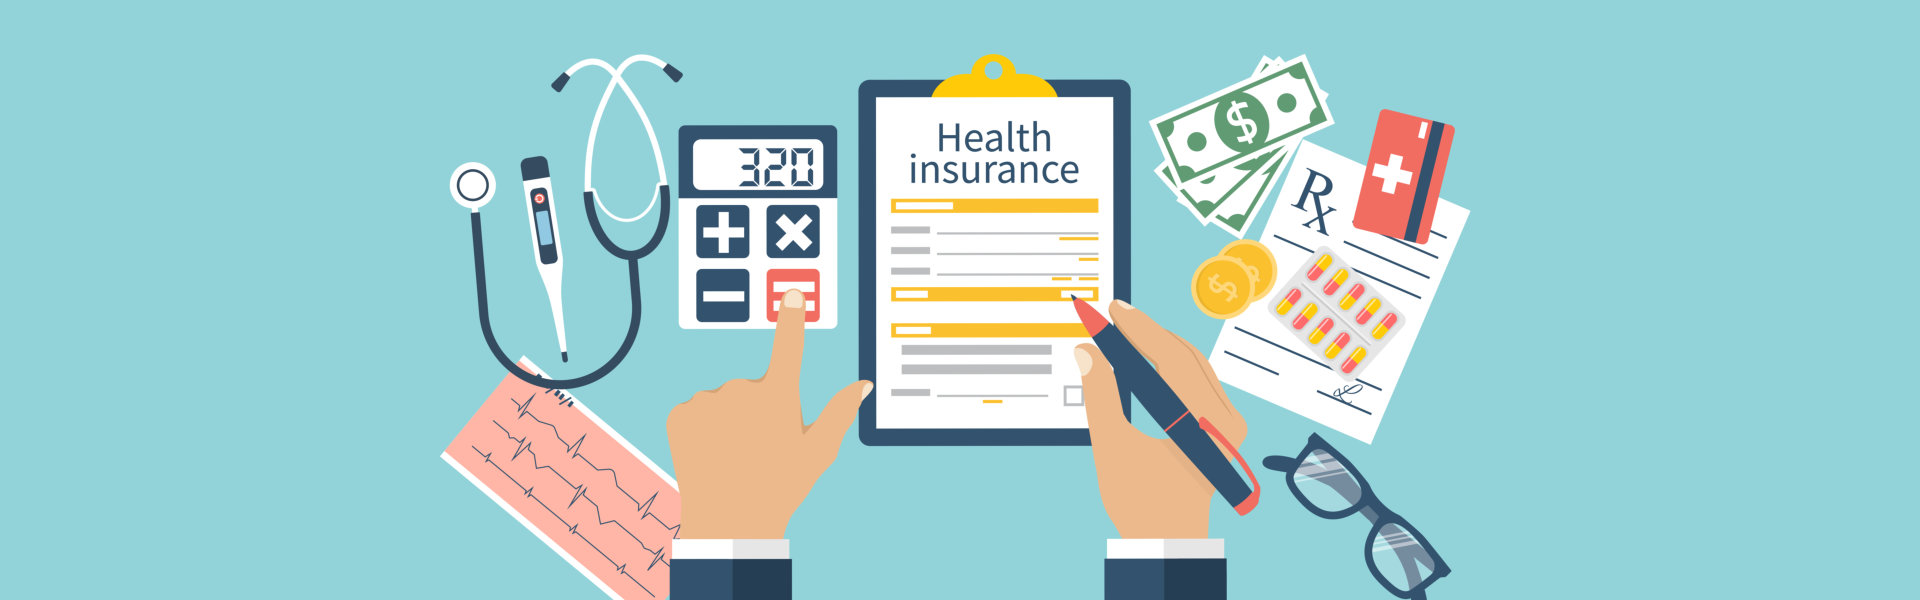 Health insurance written on a clipboard vector image